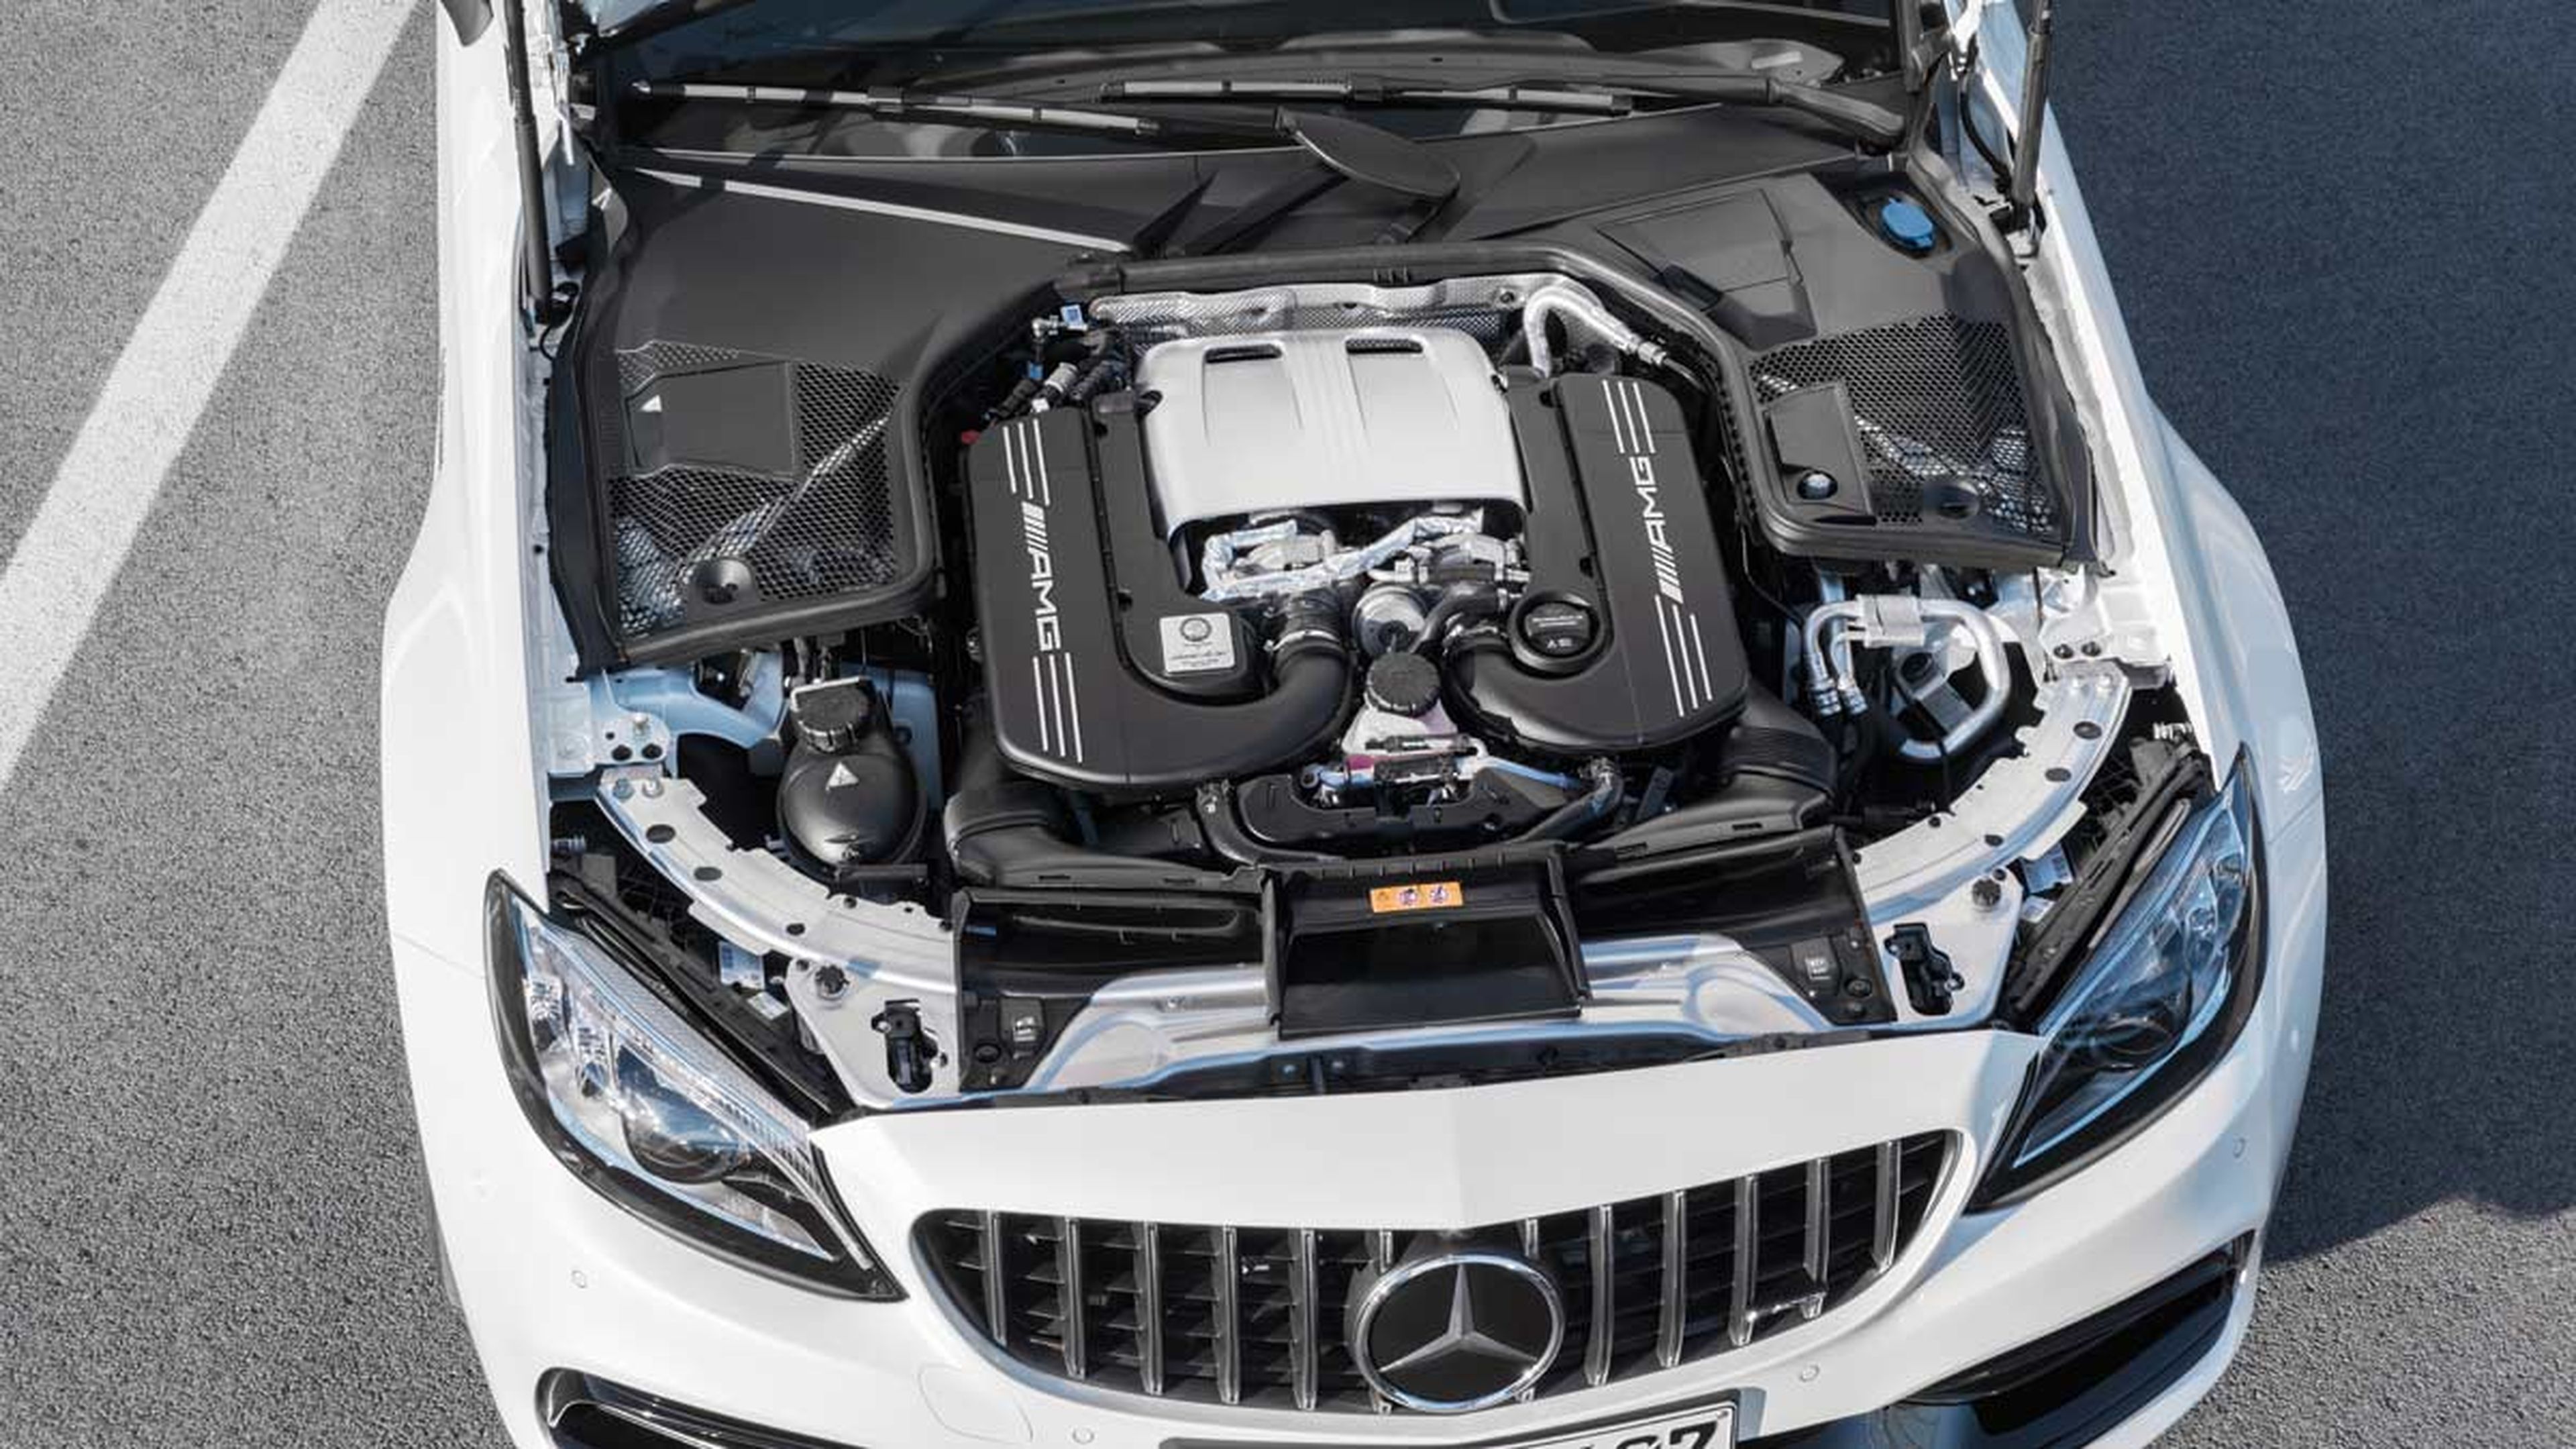 Mercedes-AMG C63 Coupé 2018 motor